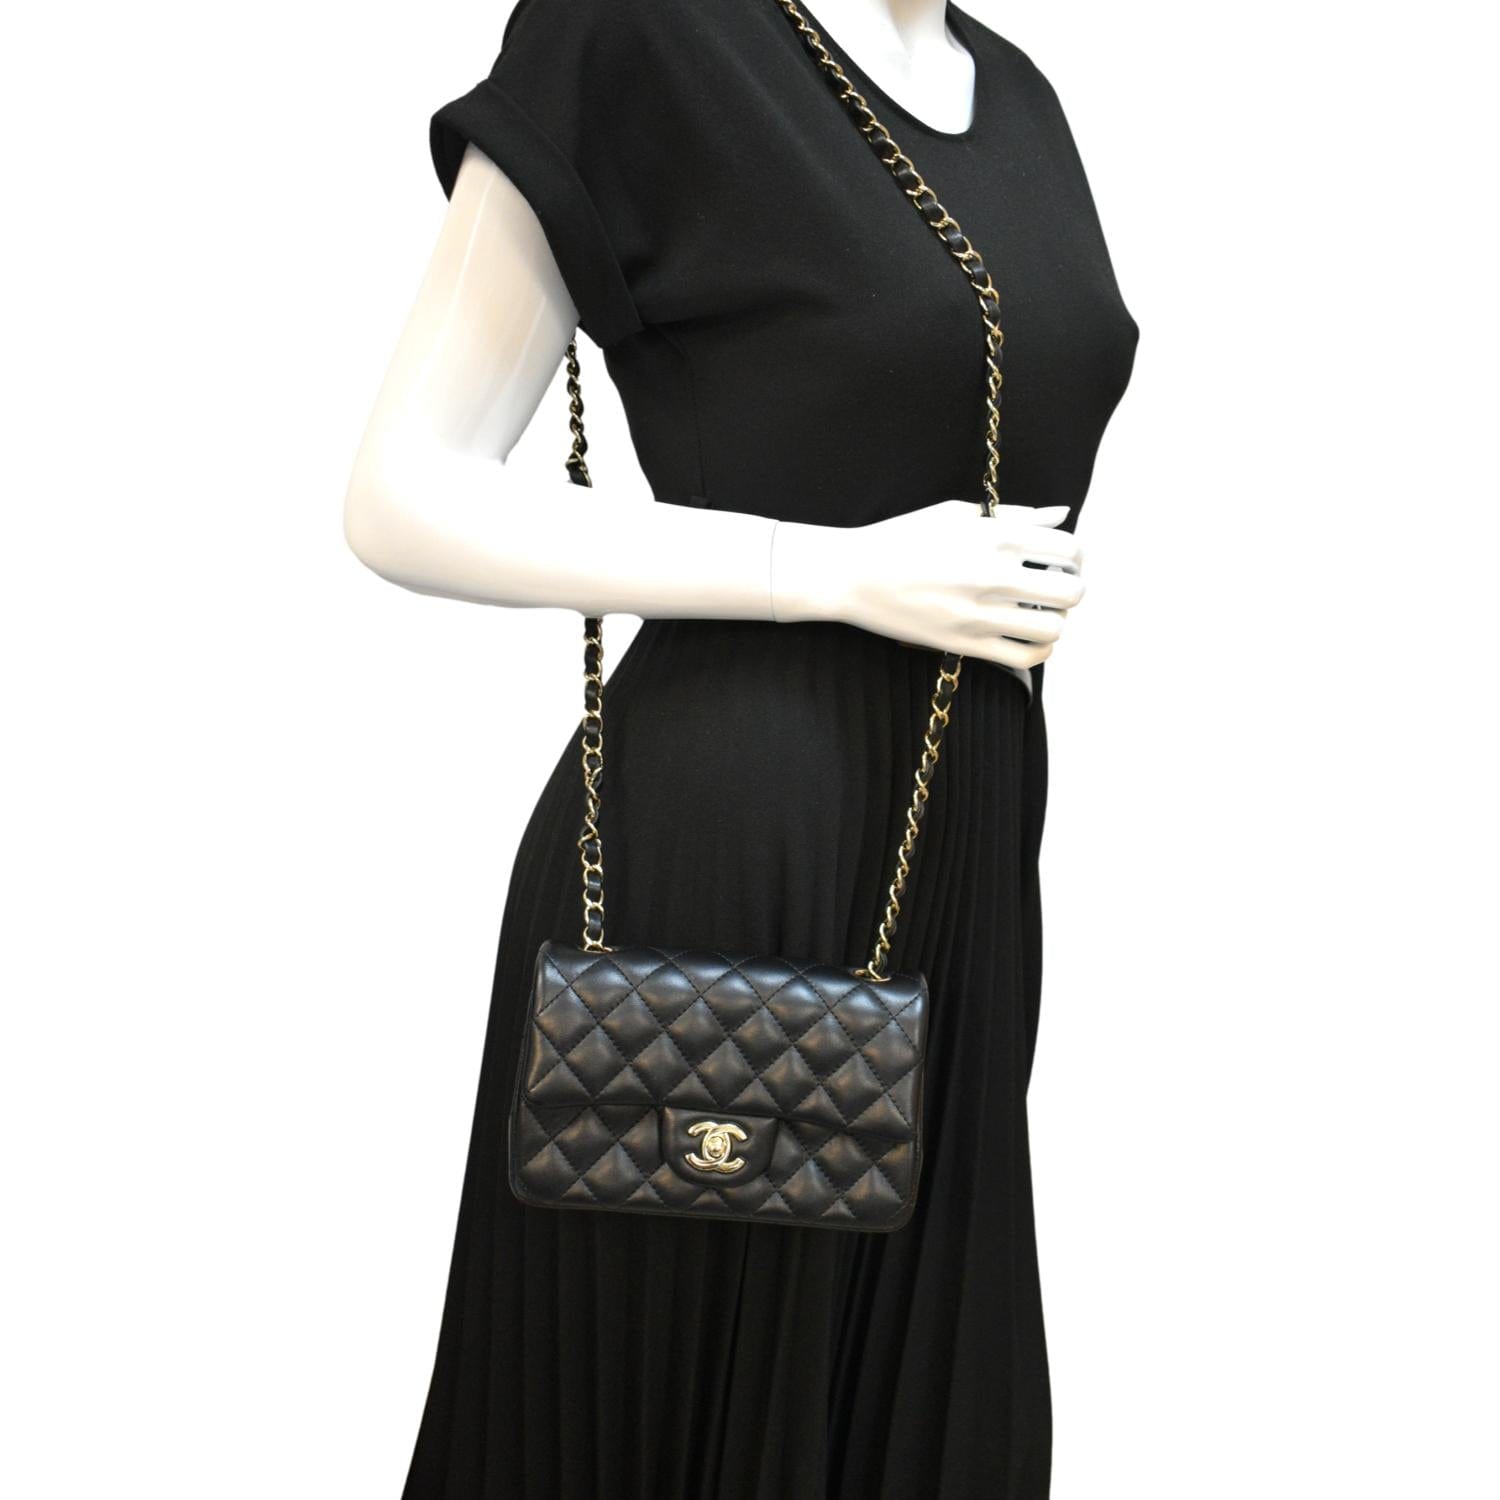 Chanel Mini Square Small Chain Shoulder Bag Crossbody Black Quilt L02